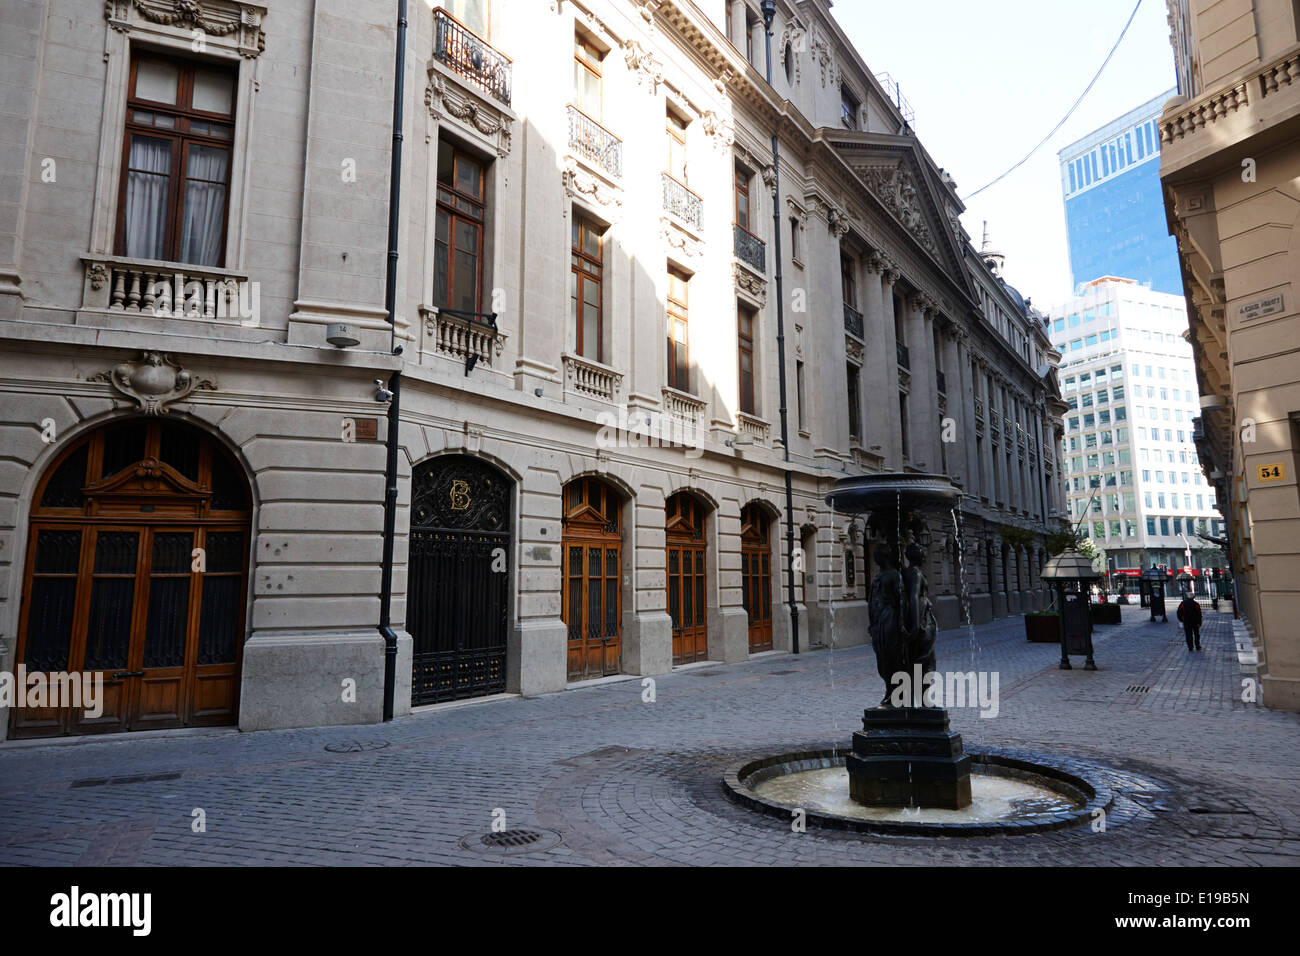 Fontana in calle Nueva York accanto a Santiago stock exchange Cile Foto Stock